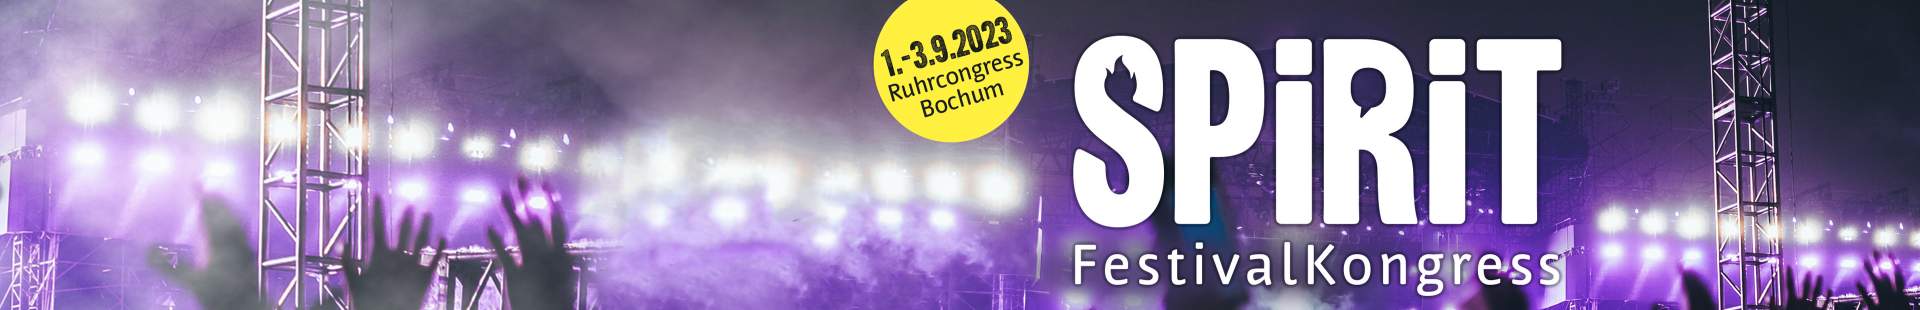 VRK – SPIRIT Festivalkongress 01. - 03.09.2023 Ruhrcongress Bochum